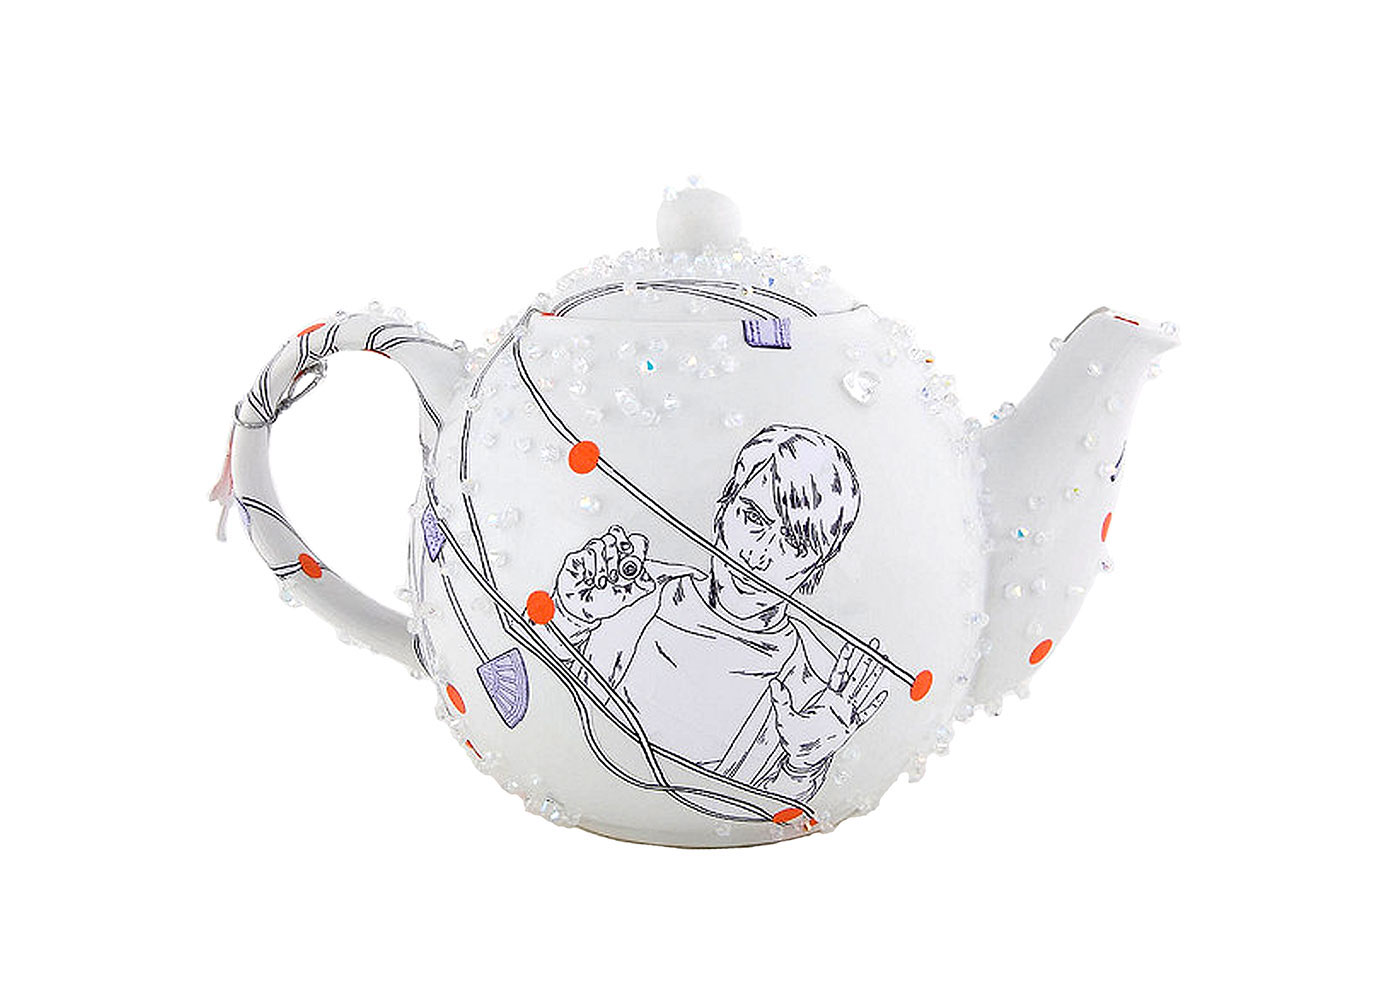 tea teapot splash self portrait digital sketch neon model handcrafted